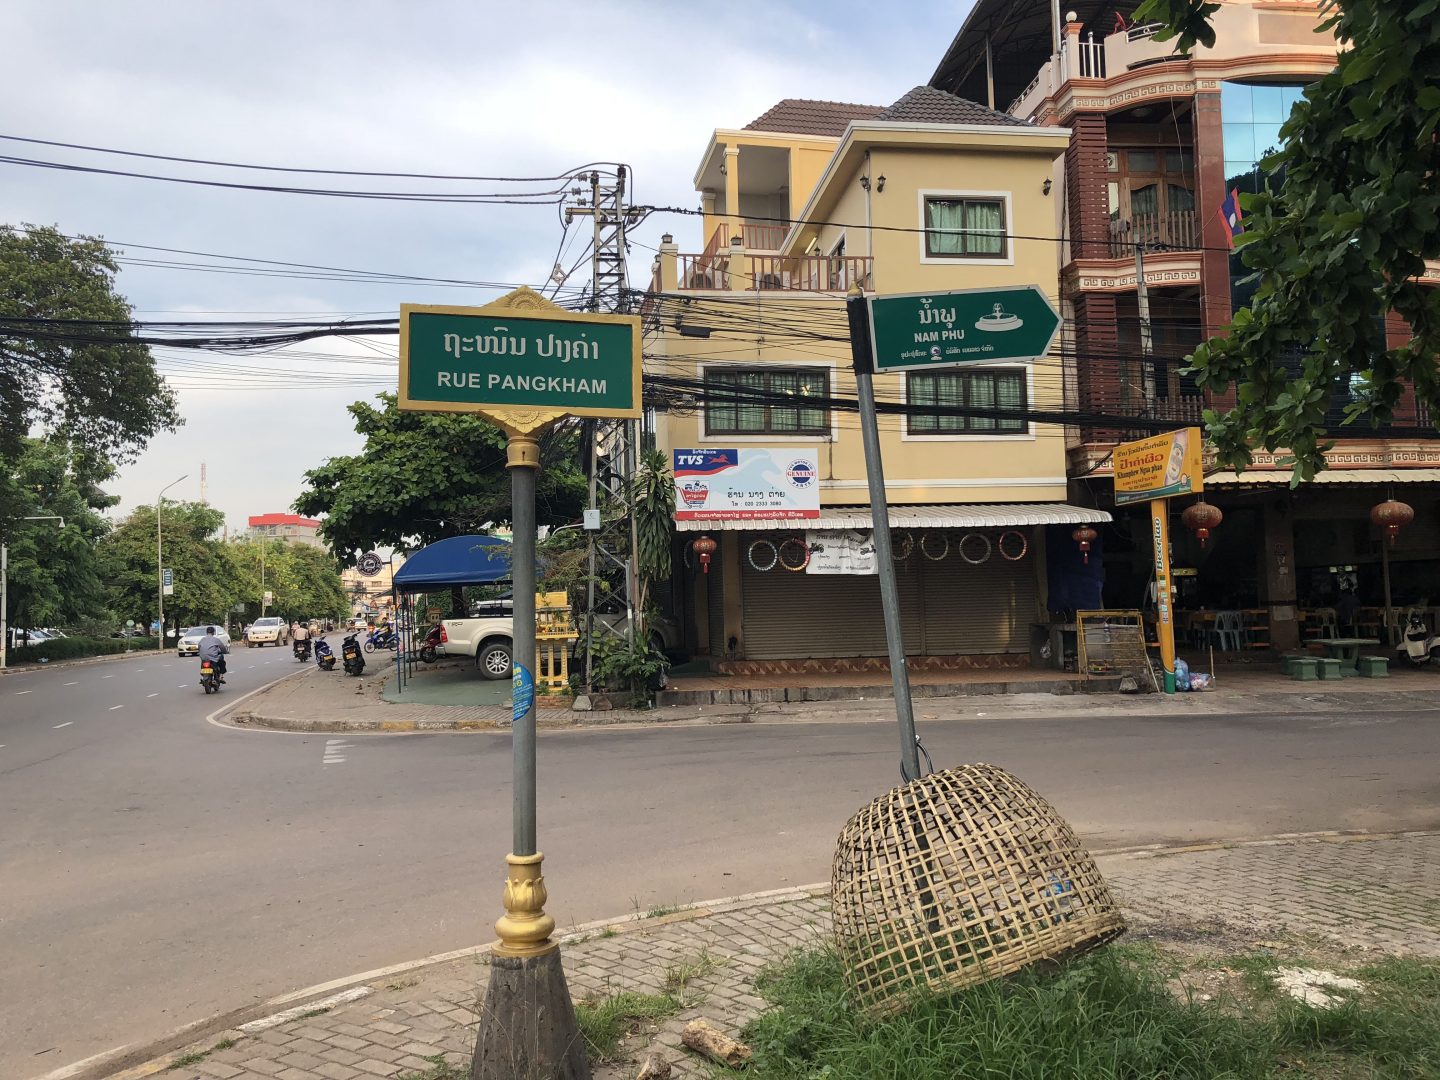 Rue Pangkham